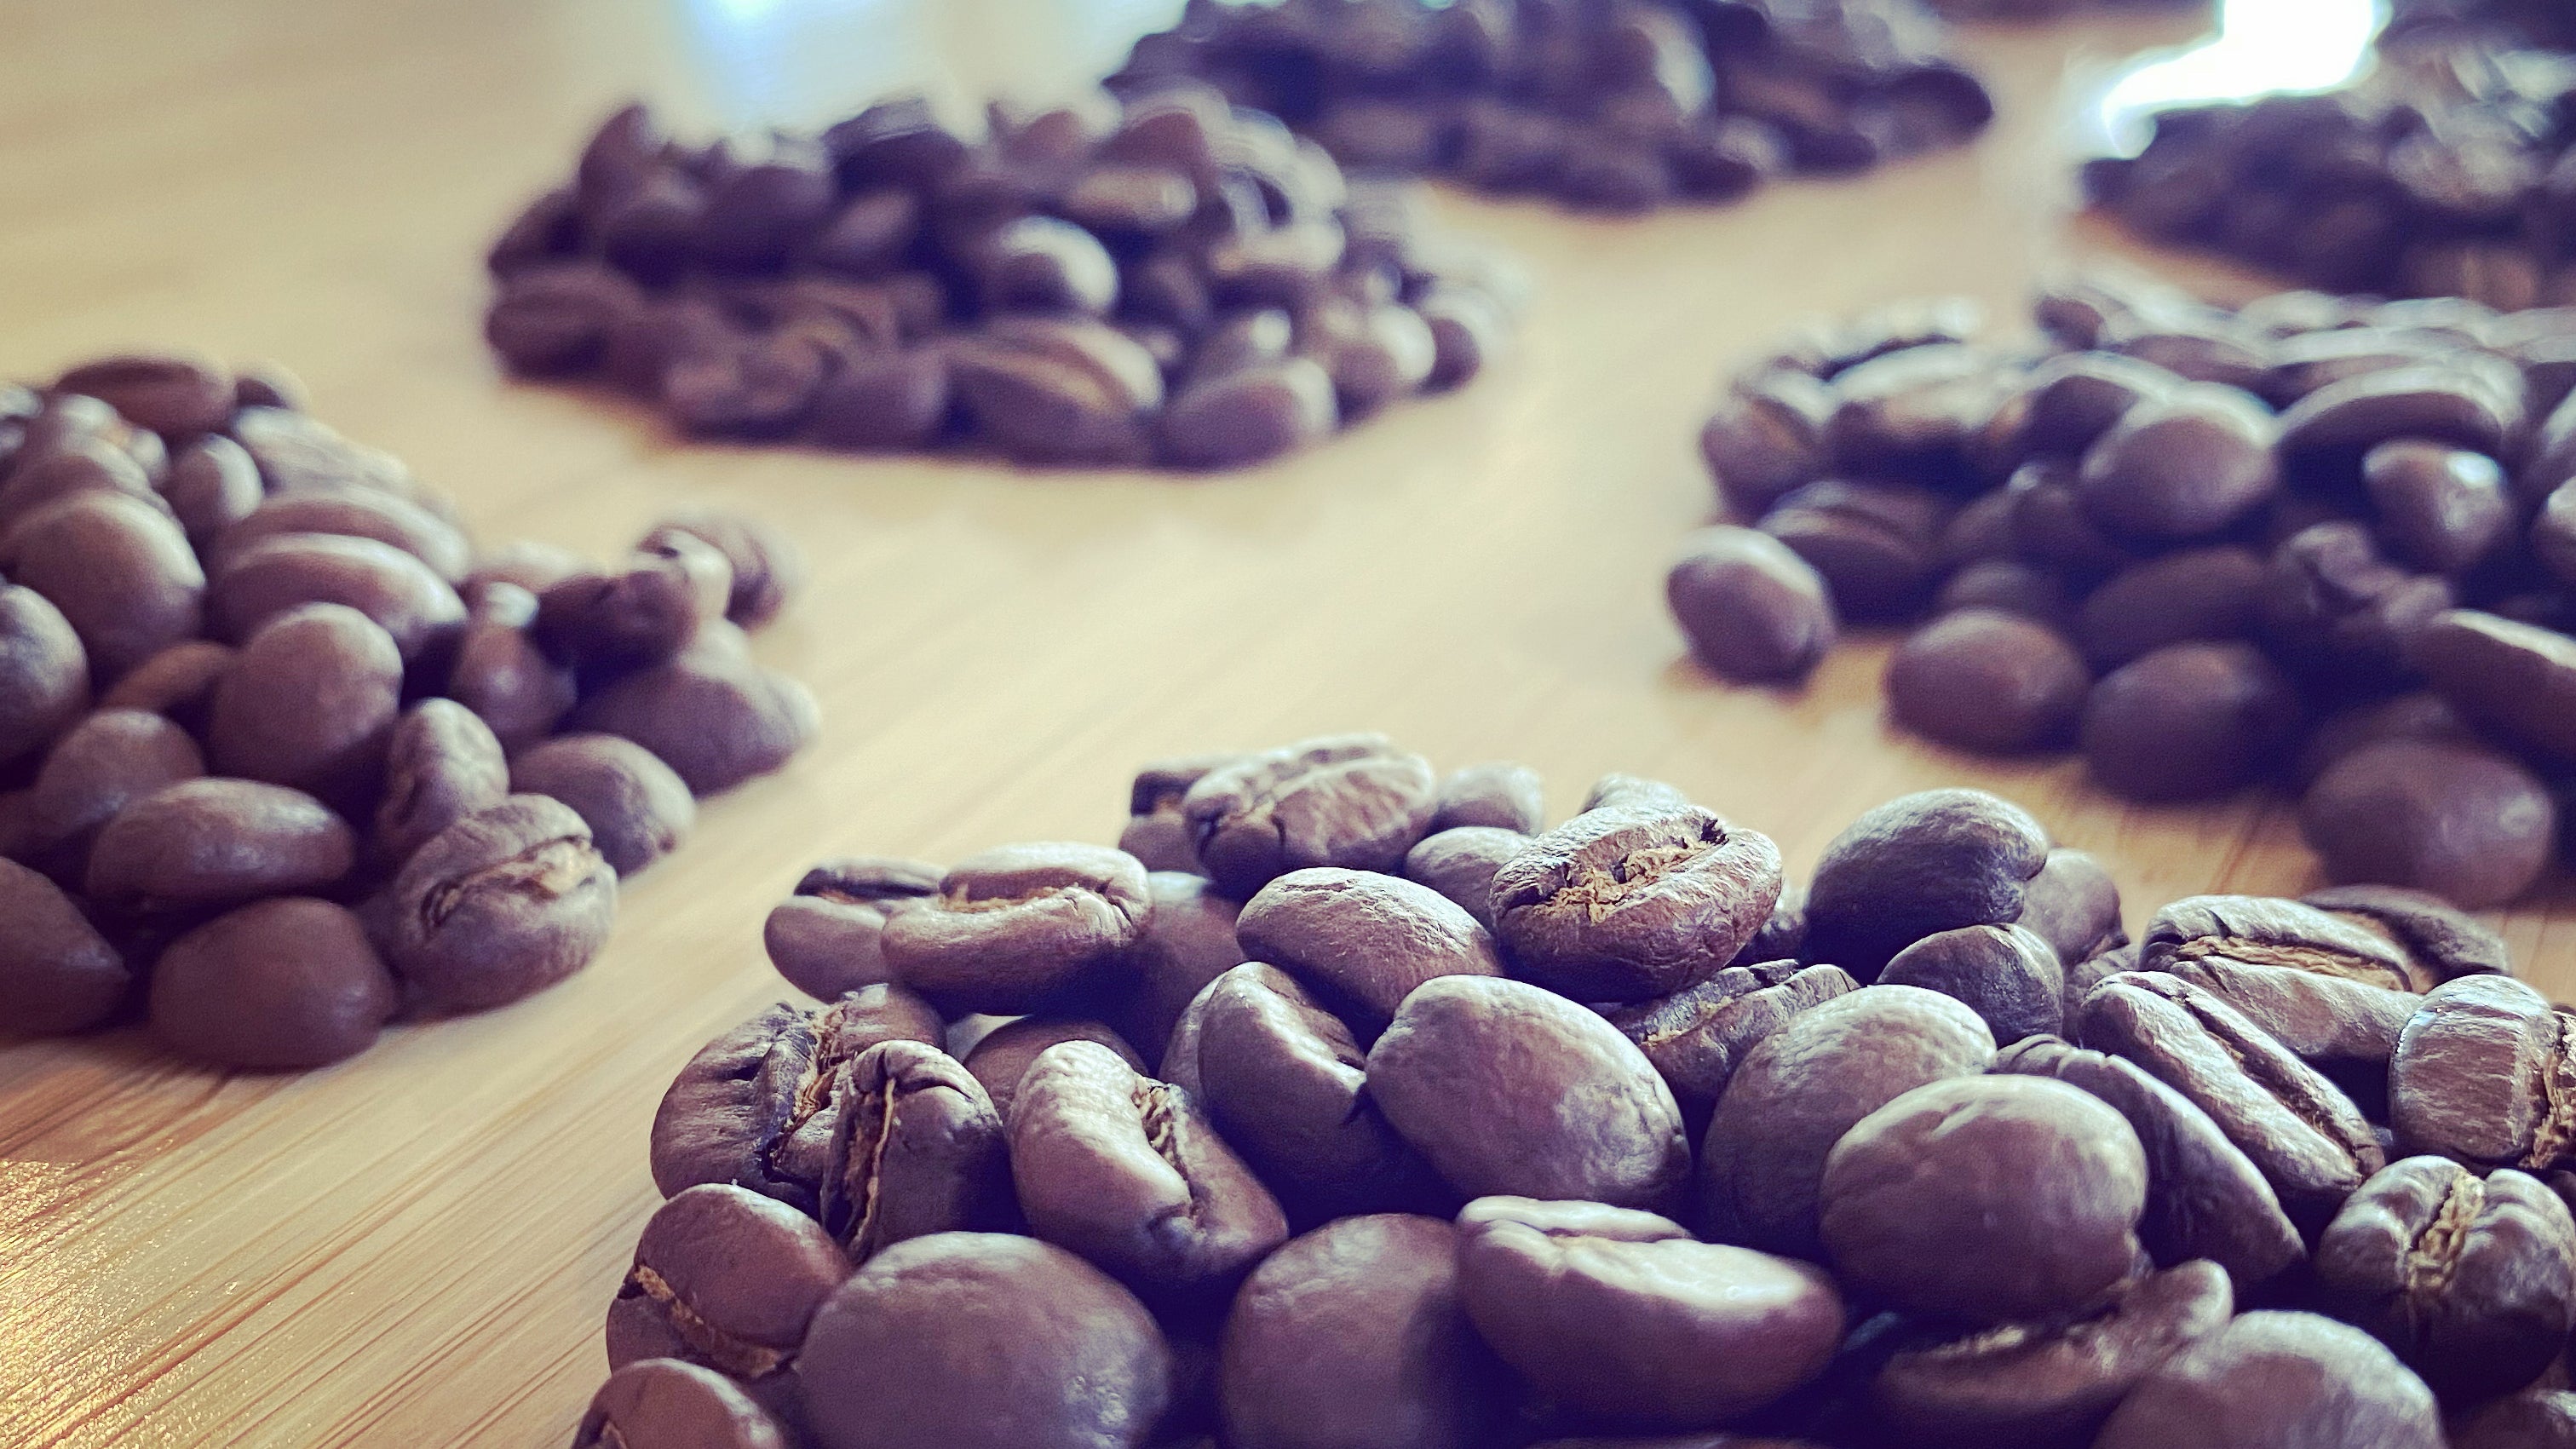 Super Groove - Central & South American Origin Coffee - Chocalaty, Low Acid  – Rare Breed Coffee